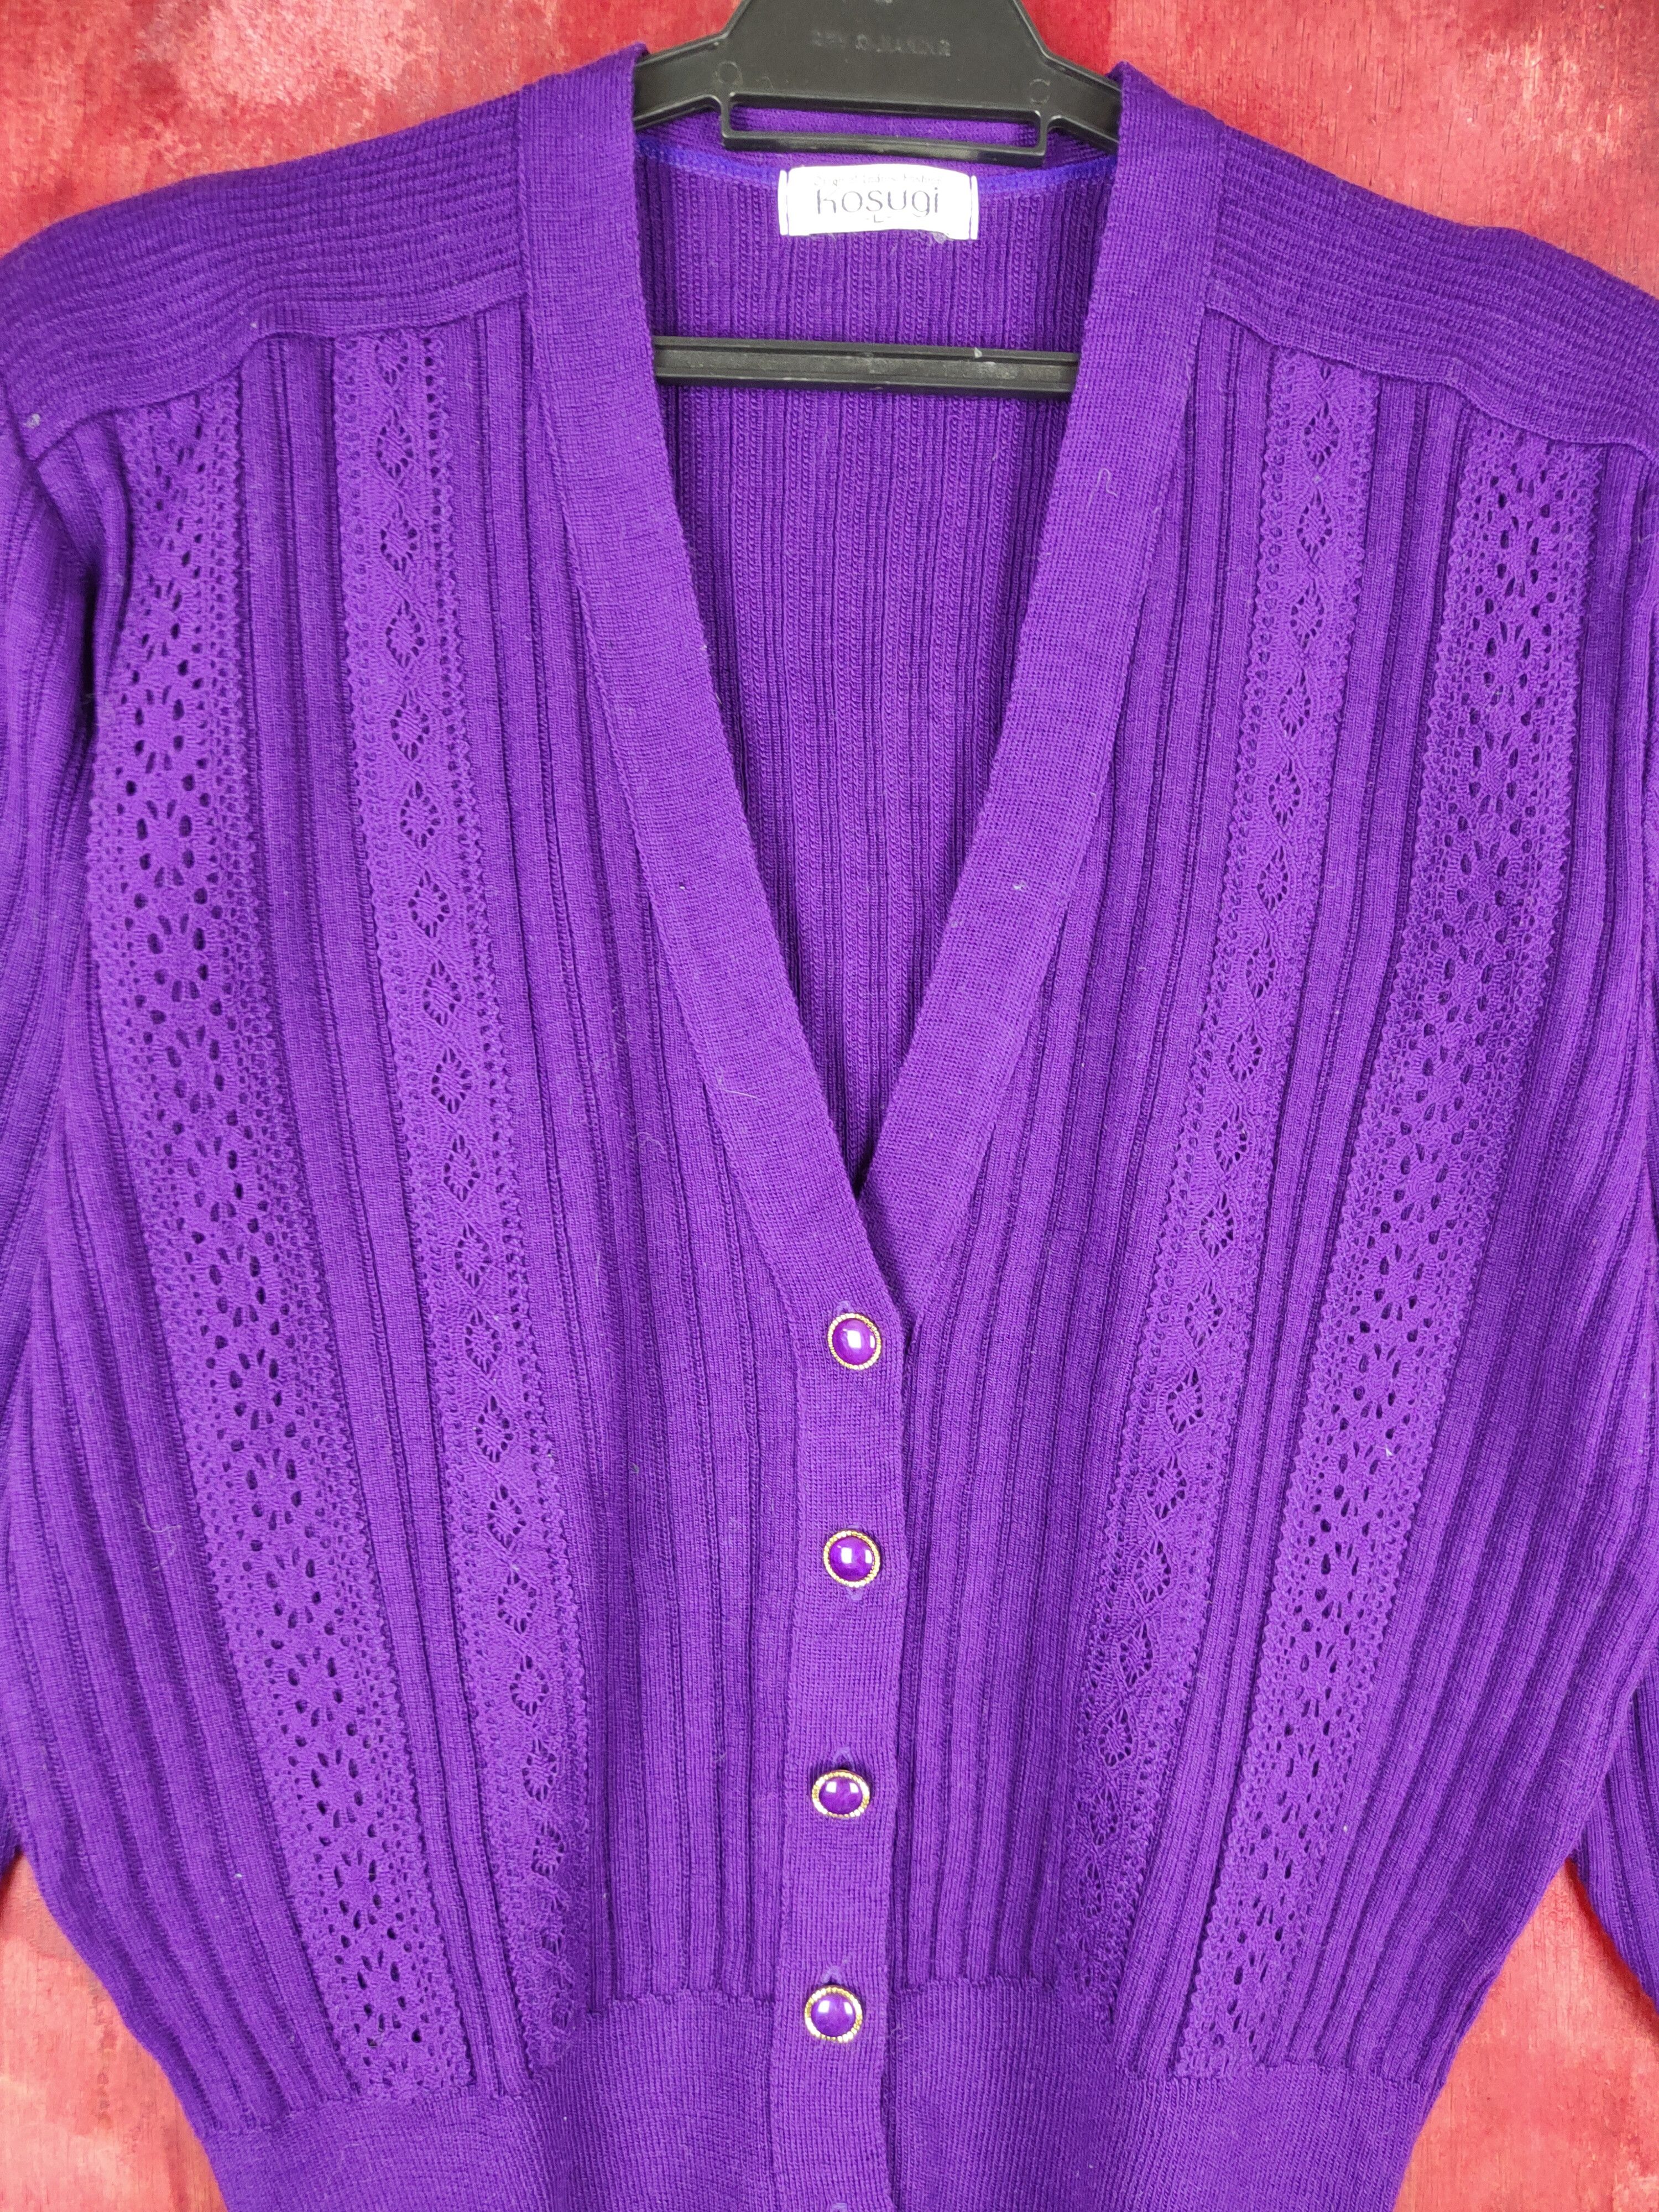 Japanese Brand Kosugi Purple Knitwear Cardigan Crop Tops Size L / US 10 / IT 46 - 2 Preview